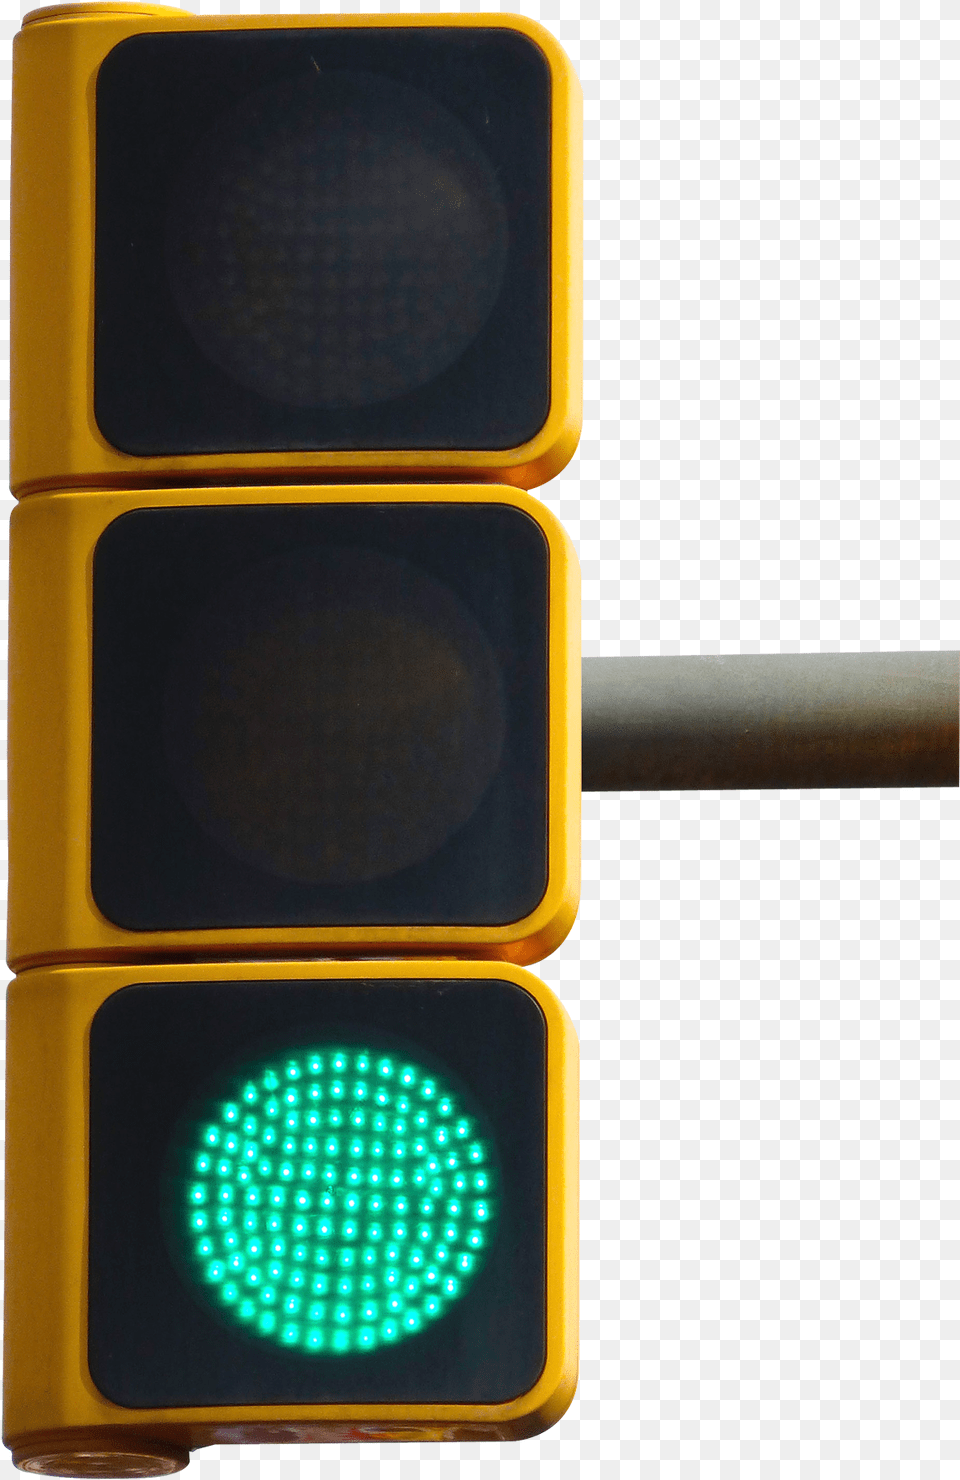 Traffic Light Transparent Image Traffic Light, Traffic Light Png